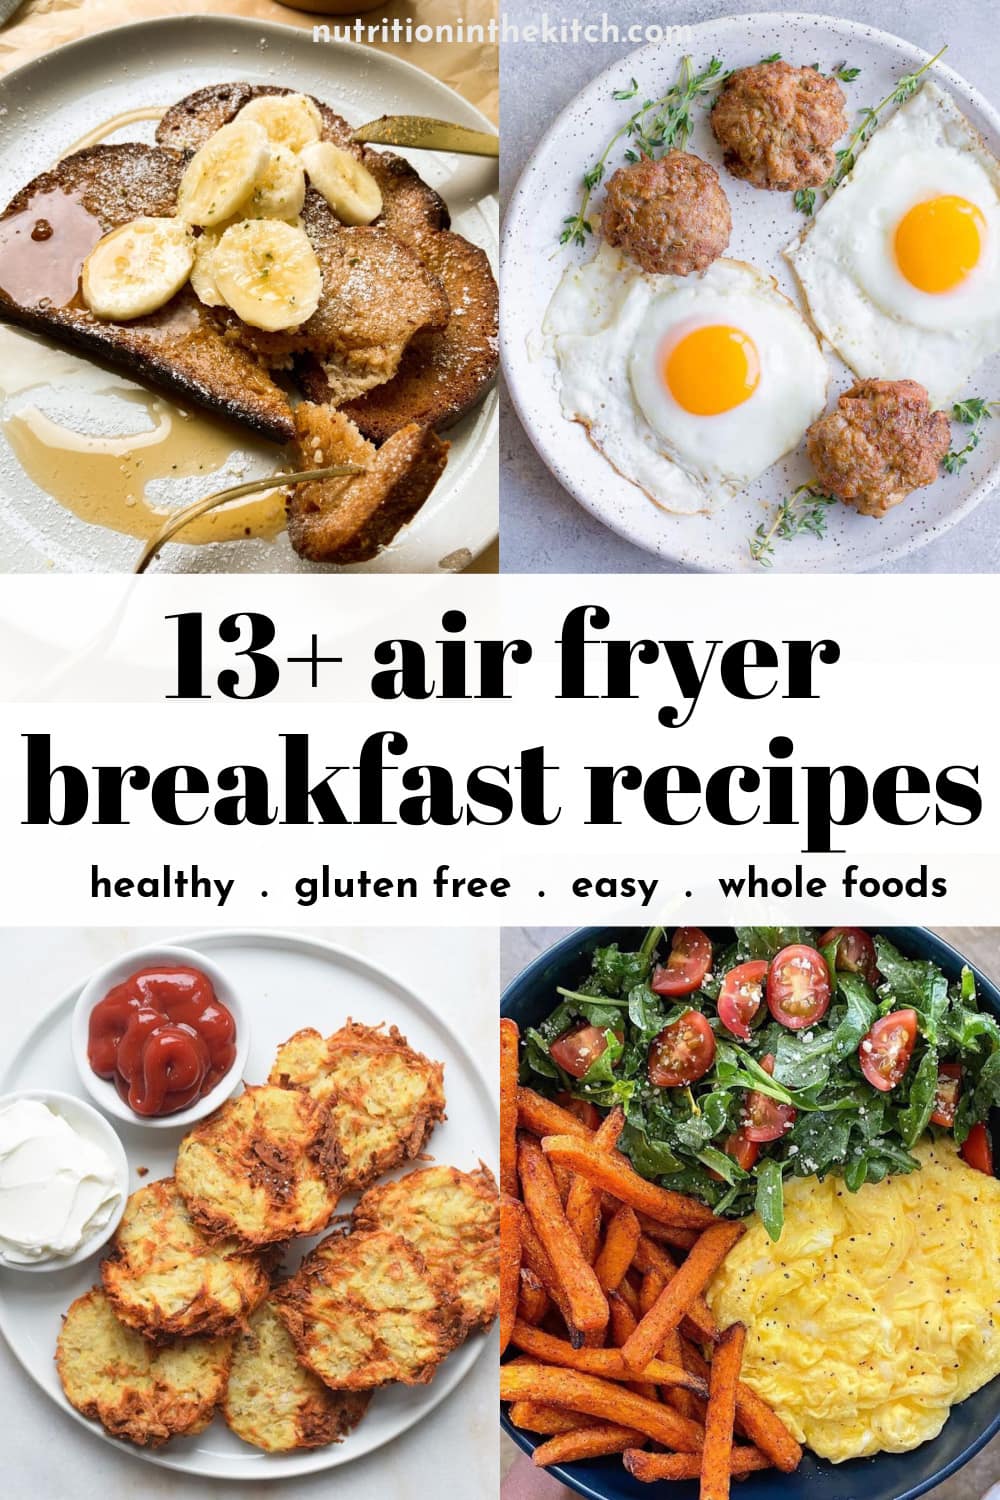 Air Fryer Breakfast Recipes